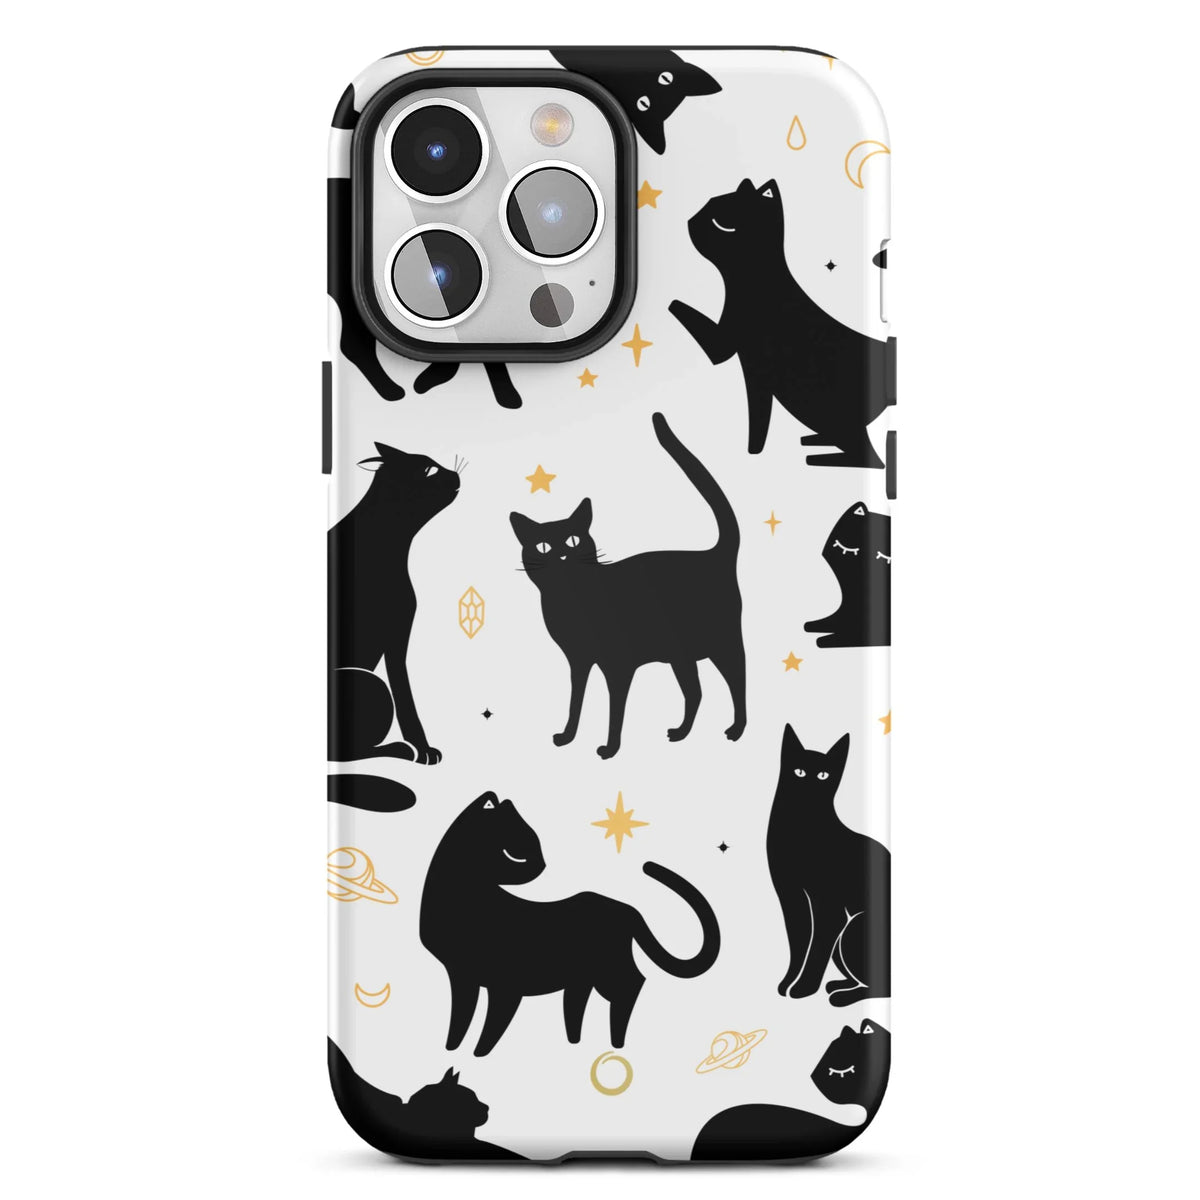 Black Cats iPhone Case - iPhone 12 Pro Max